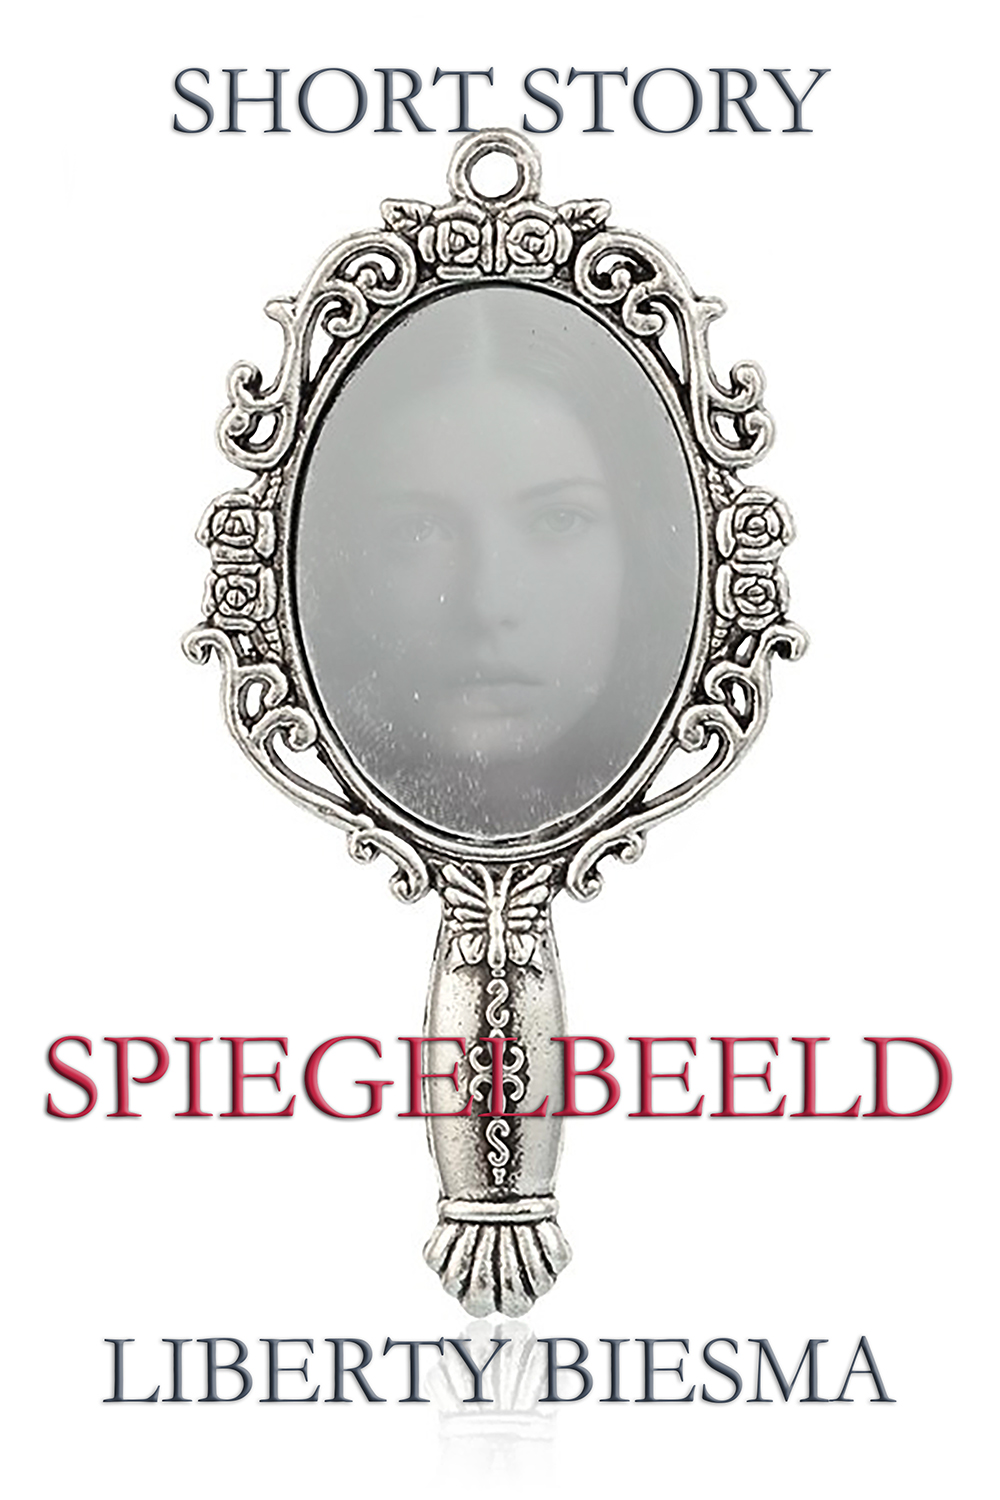 Spiegelbeeld - A short story by Liberty Biesma